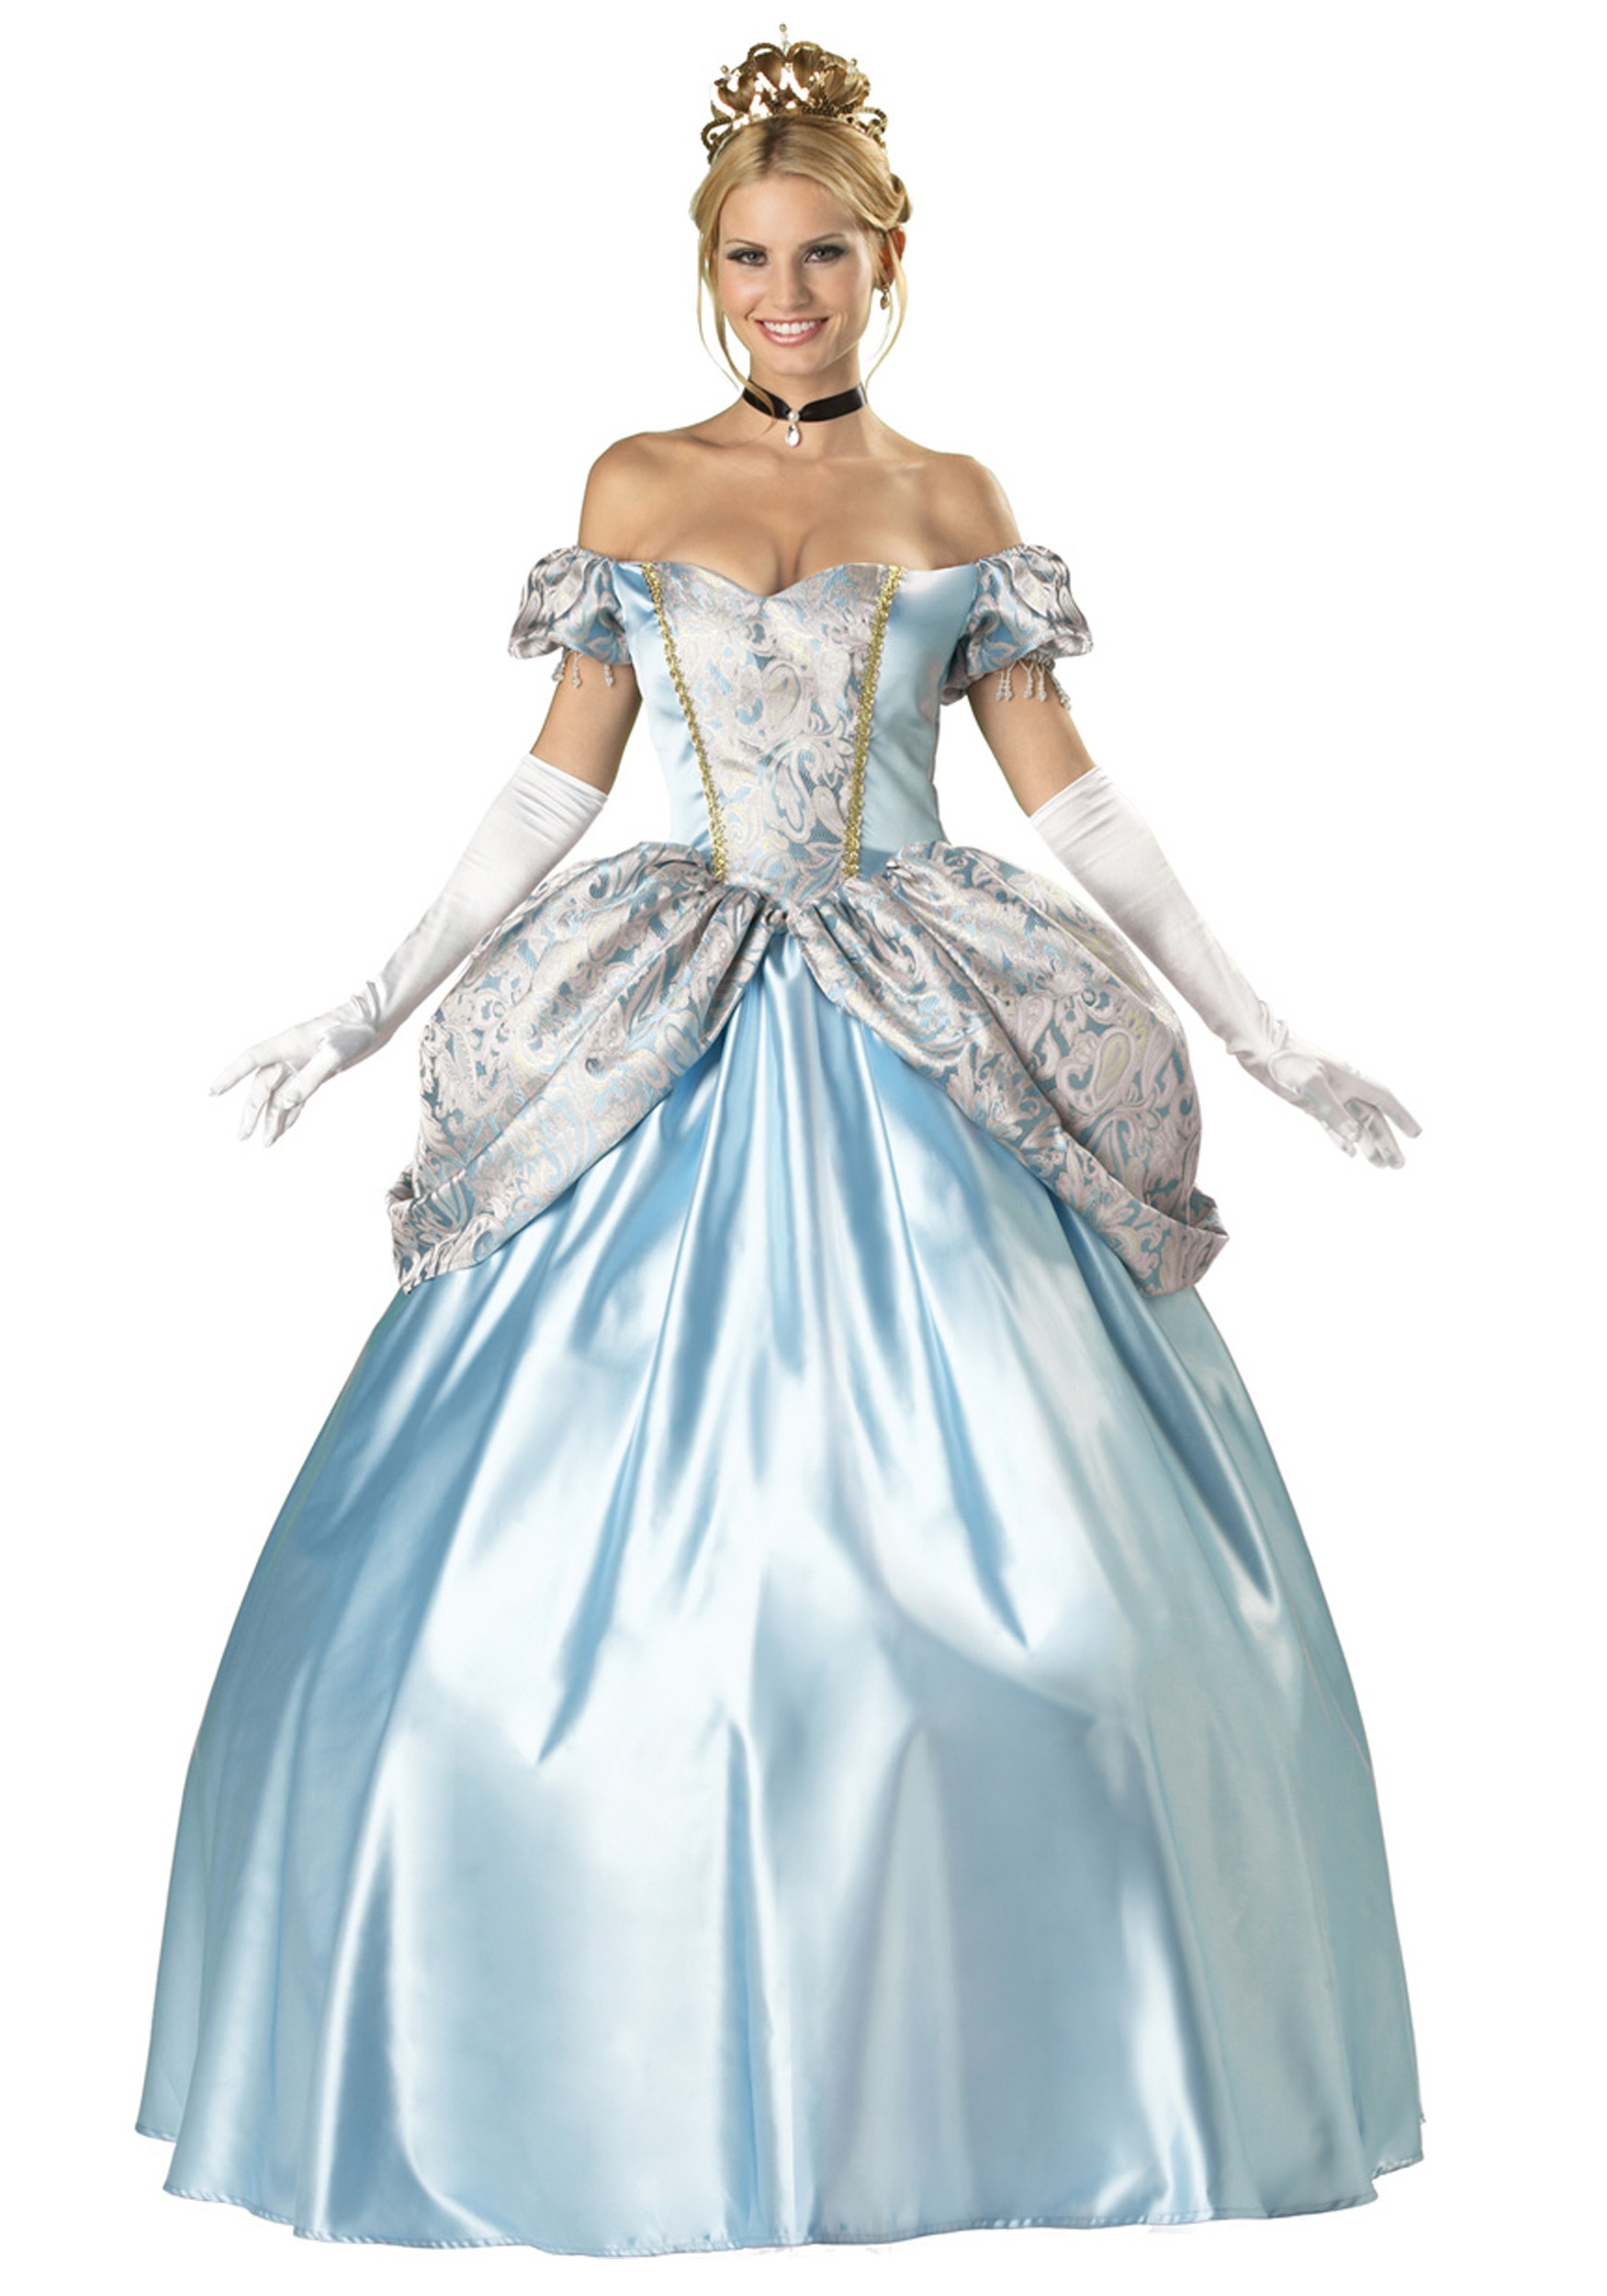 Elite Enchanting Princess Costume